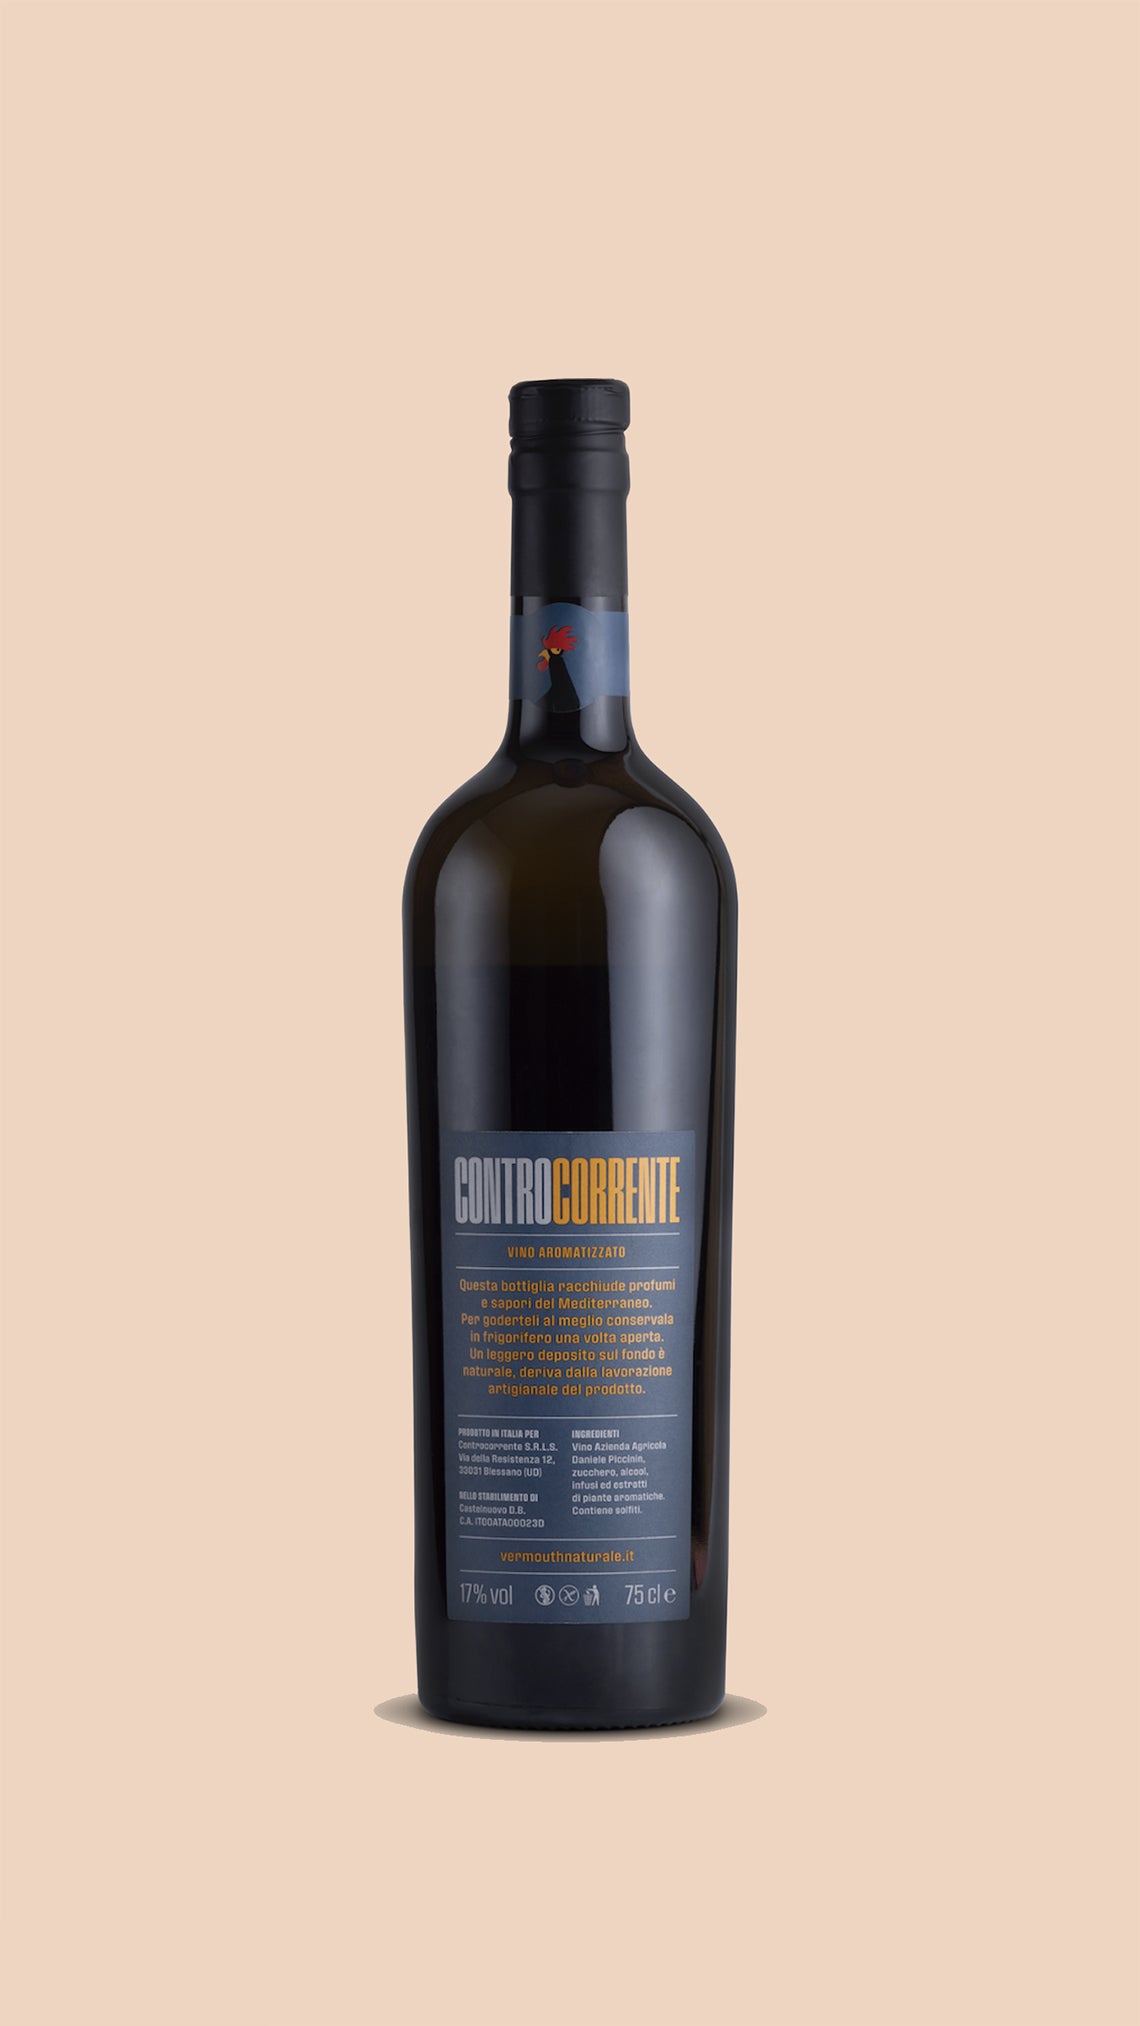 Vermouth Bianco, Controcorrente